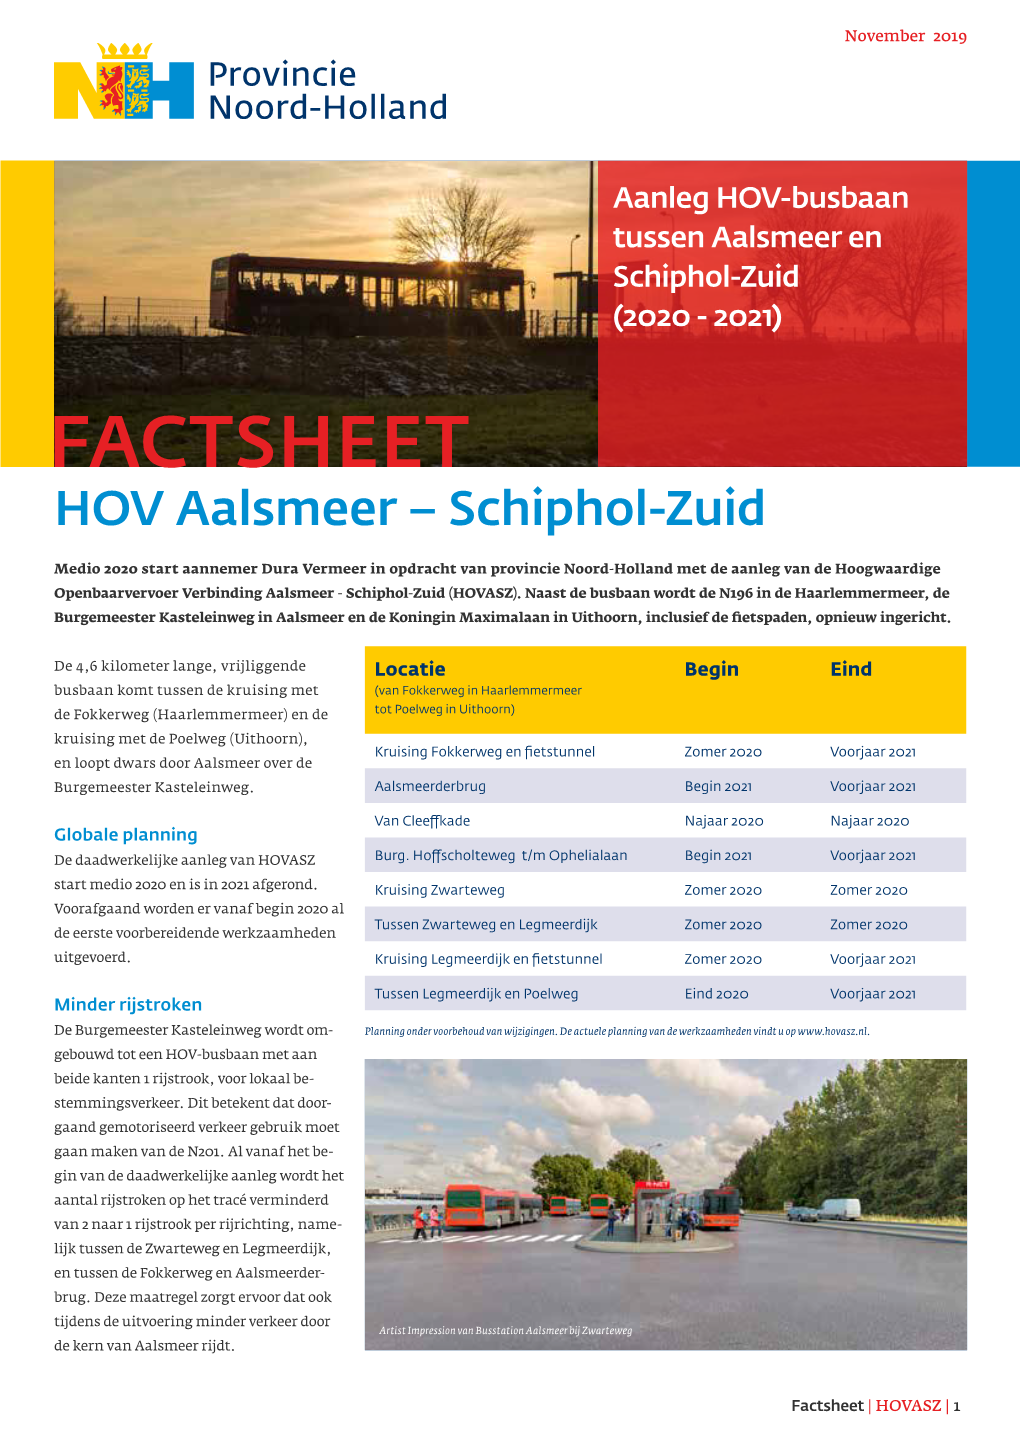 FACTSHEET HOV Aalsmeer – Schiphol-Zuid